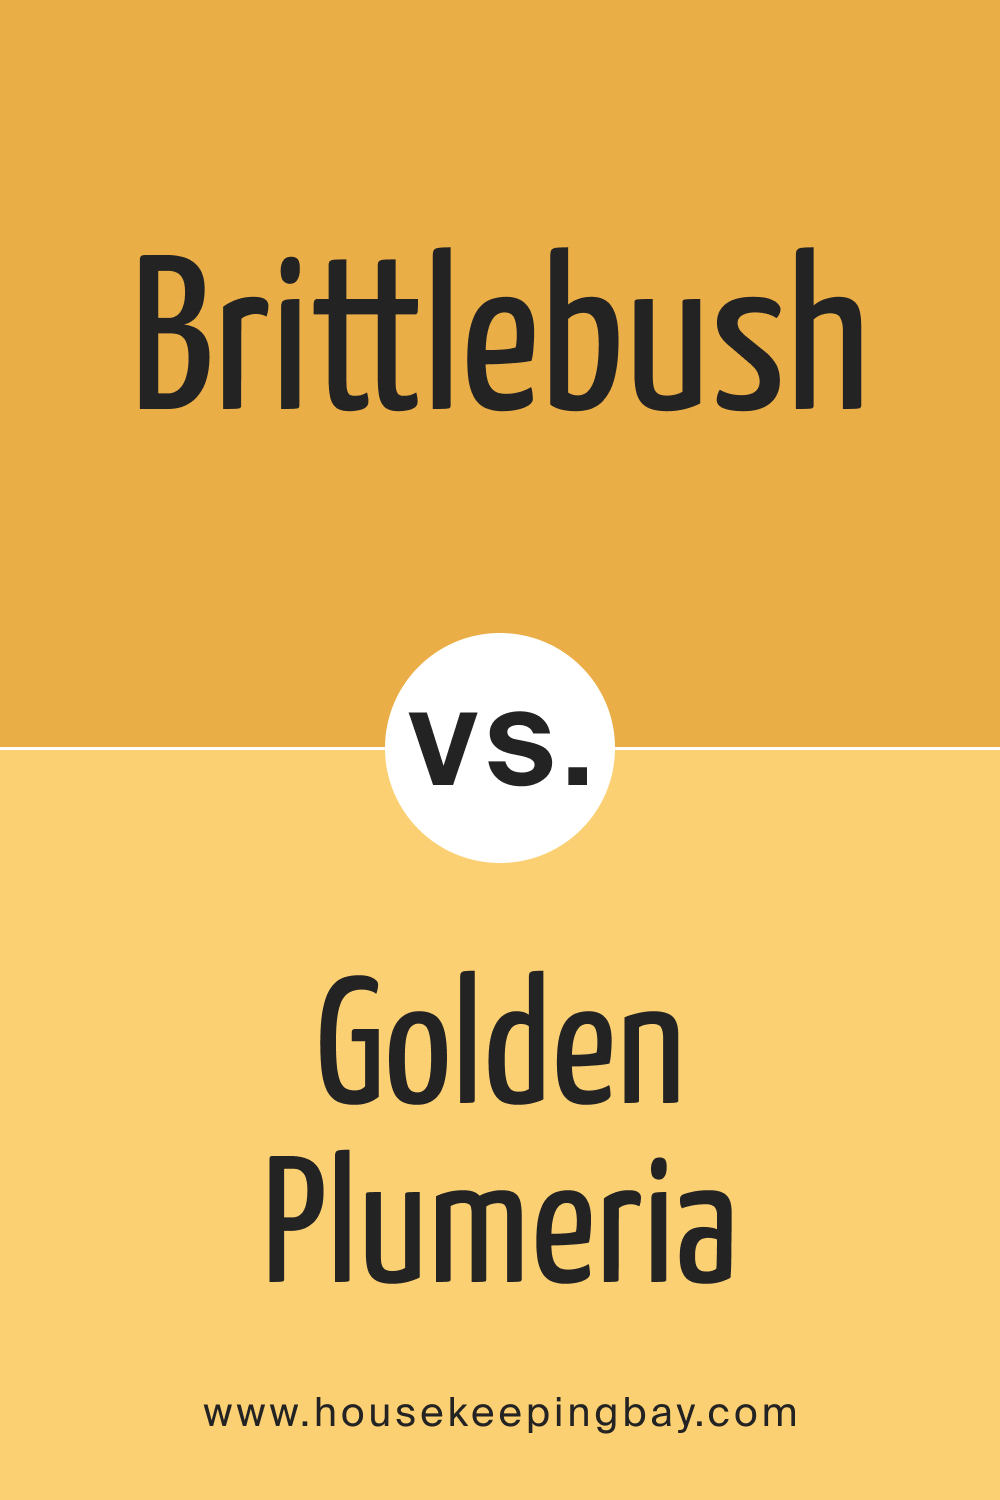 Brittlebush SW 6684 vs SW 9019 Golden Plumeria